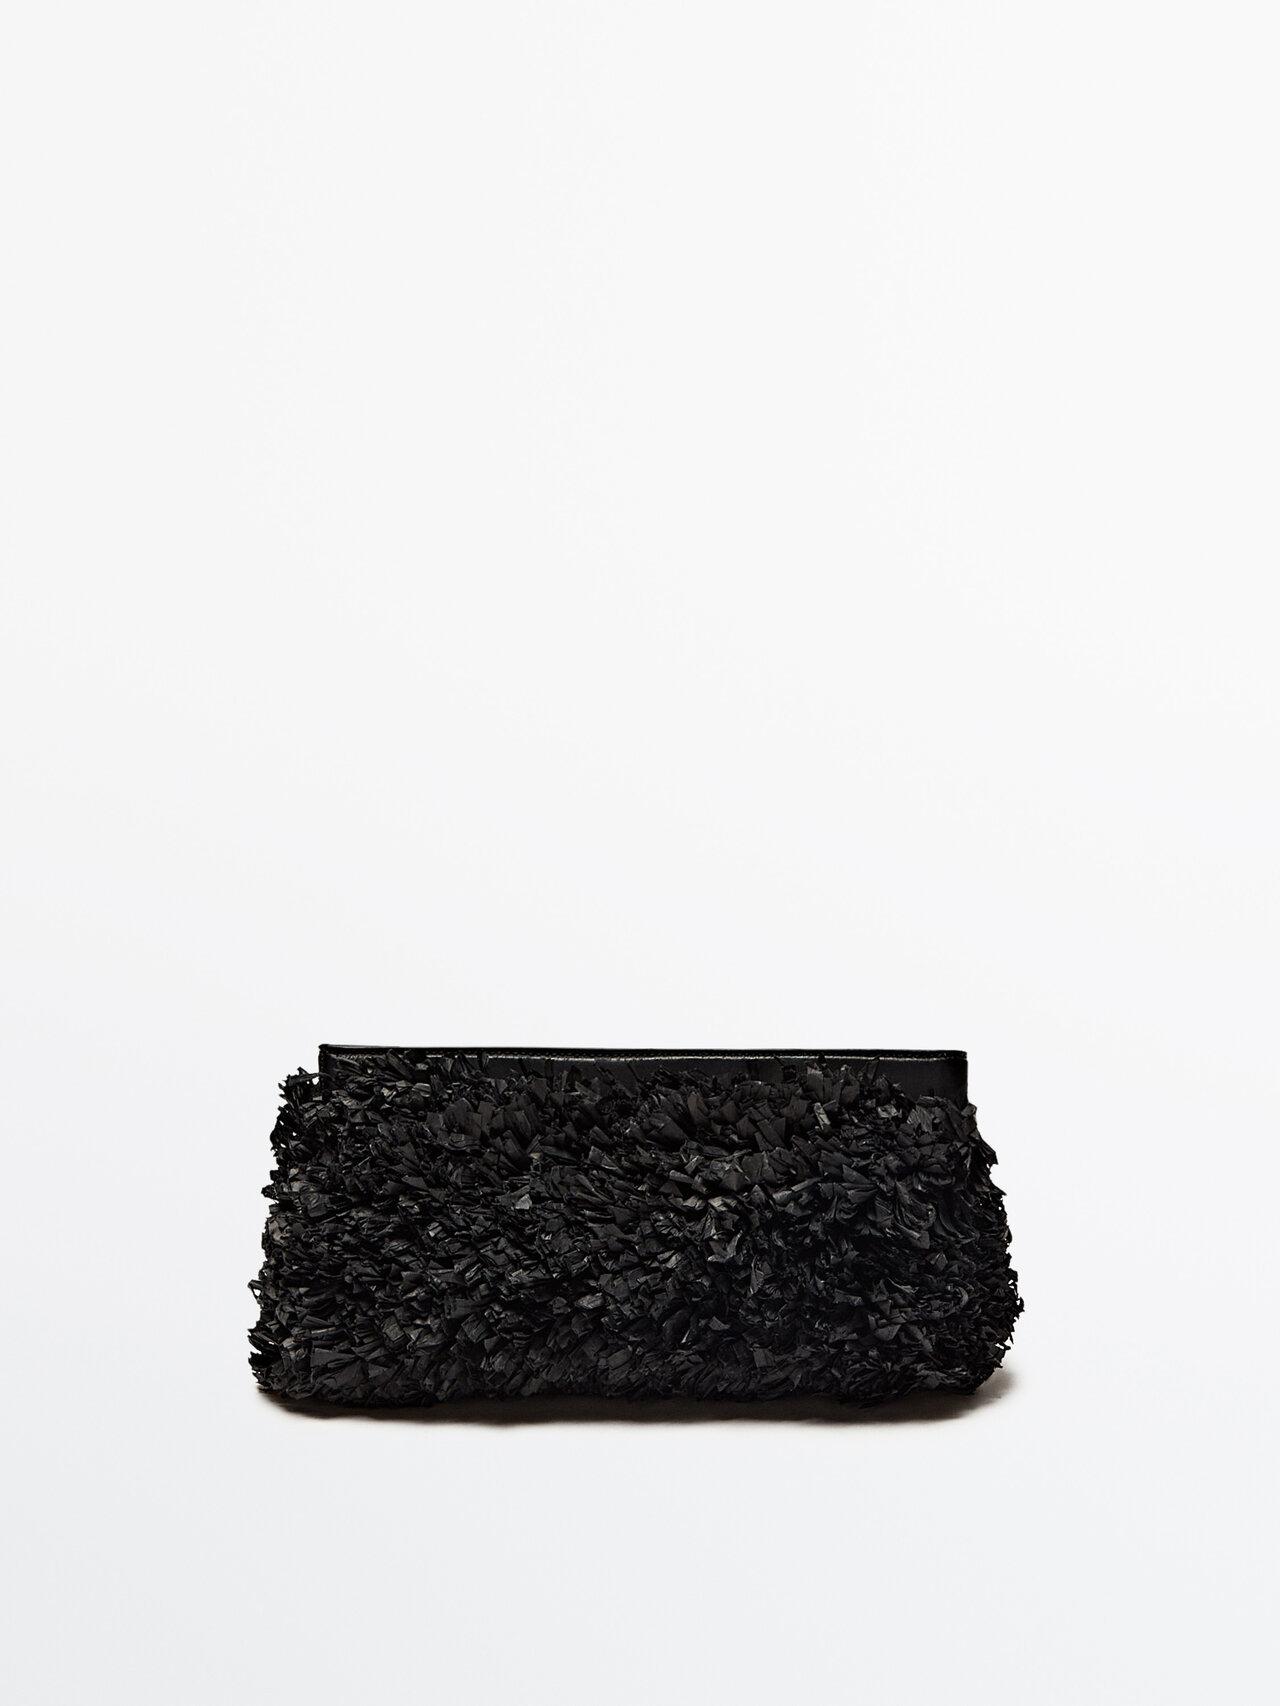 MASSIMO DUTTI Raffia Clutch Bag With Leather Strap in Black | Lyst